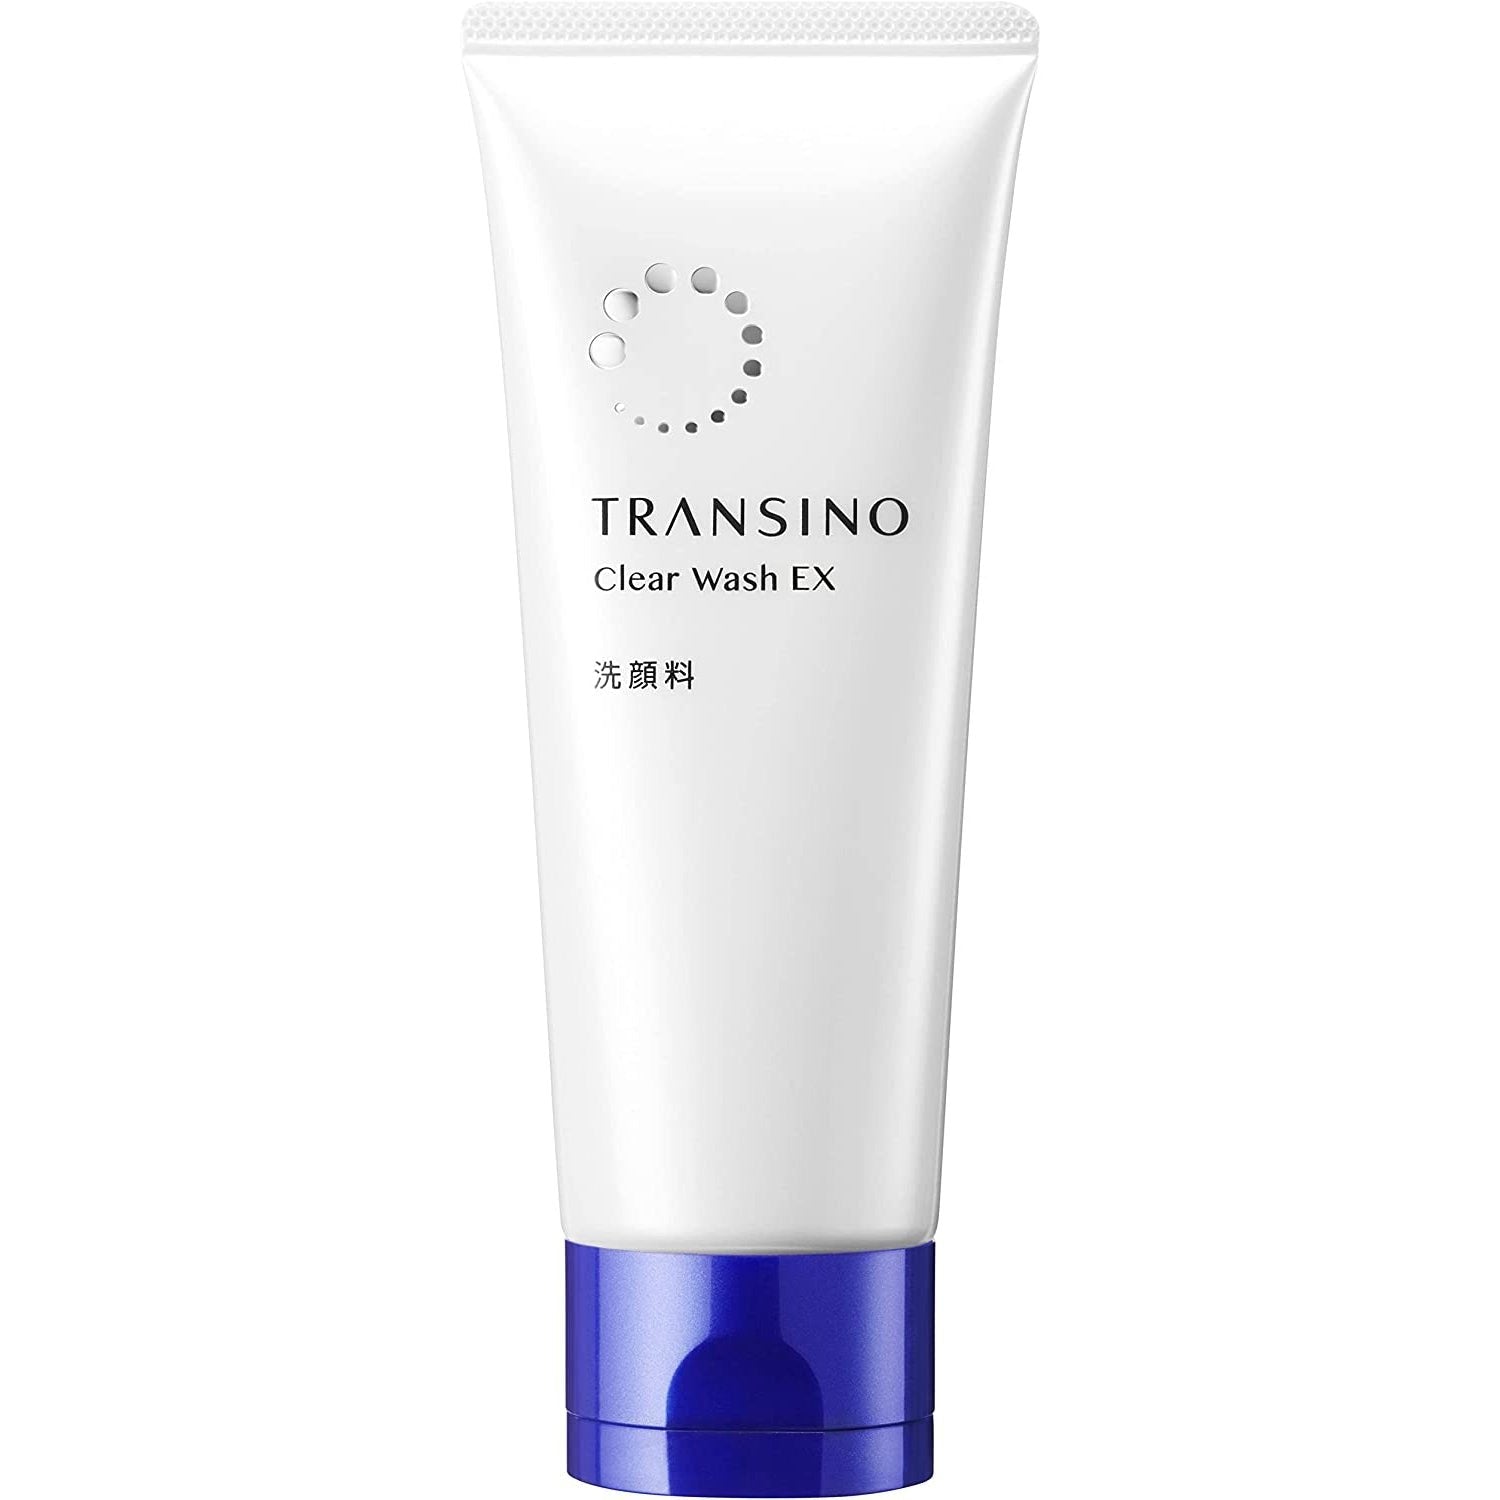 Transino Clear Wash EX Foaming Cleanser 100g